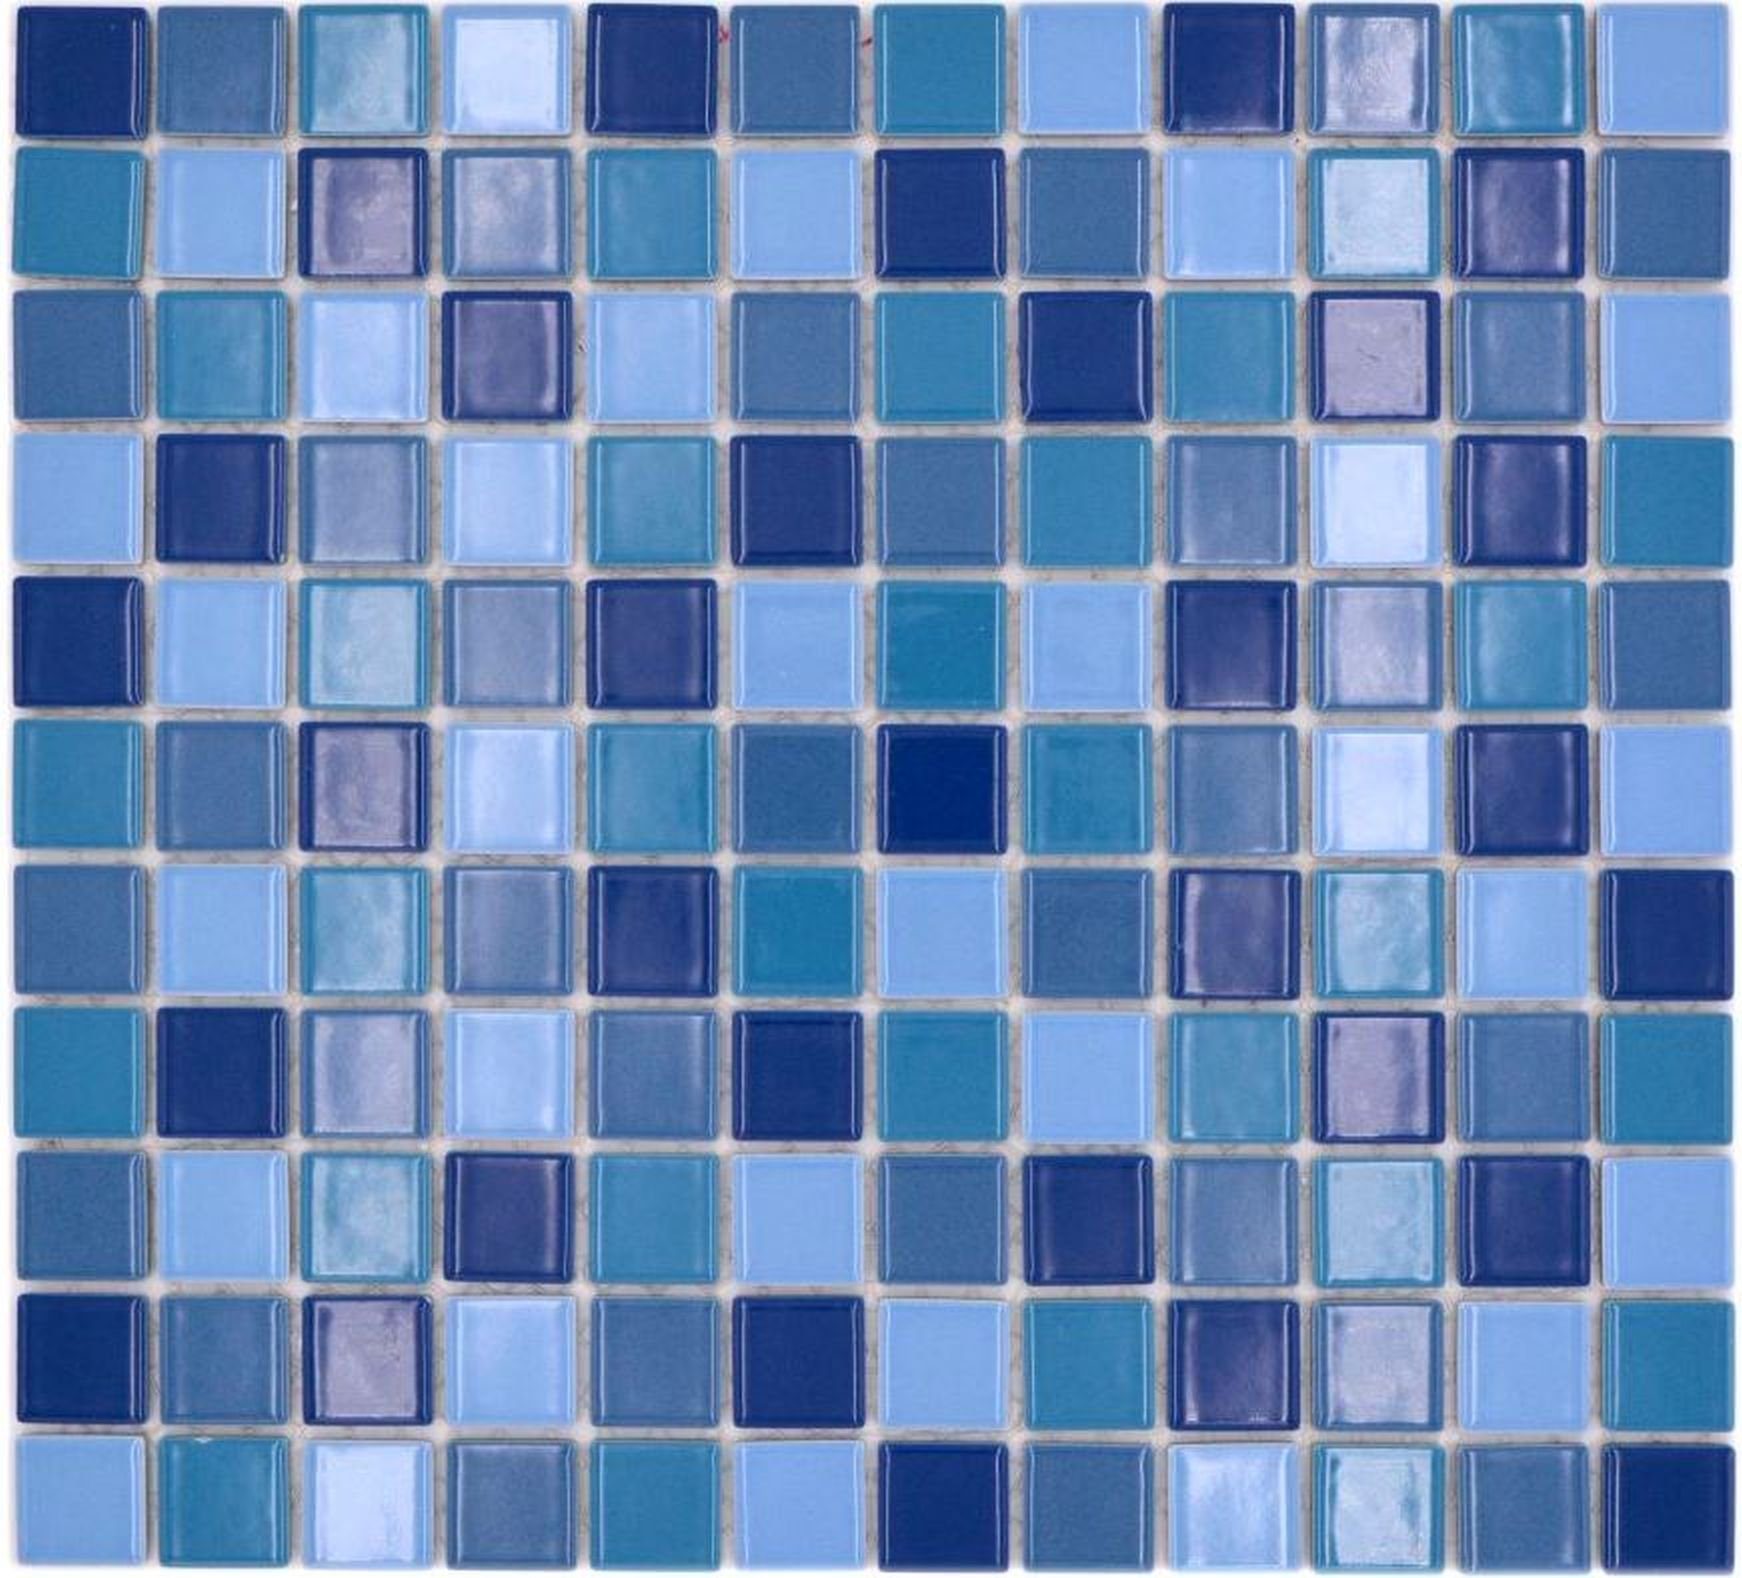 Mosani Mosaikfliesen Keramik Mosaik blau grün türkis glänzend Fliese Fliesenspiegel